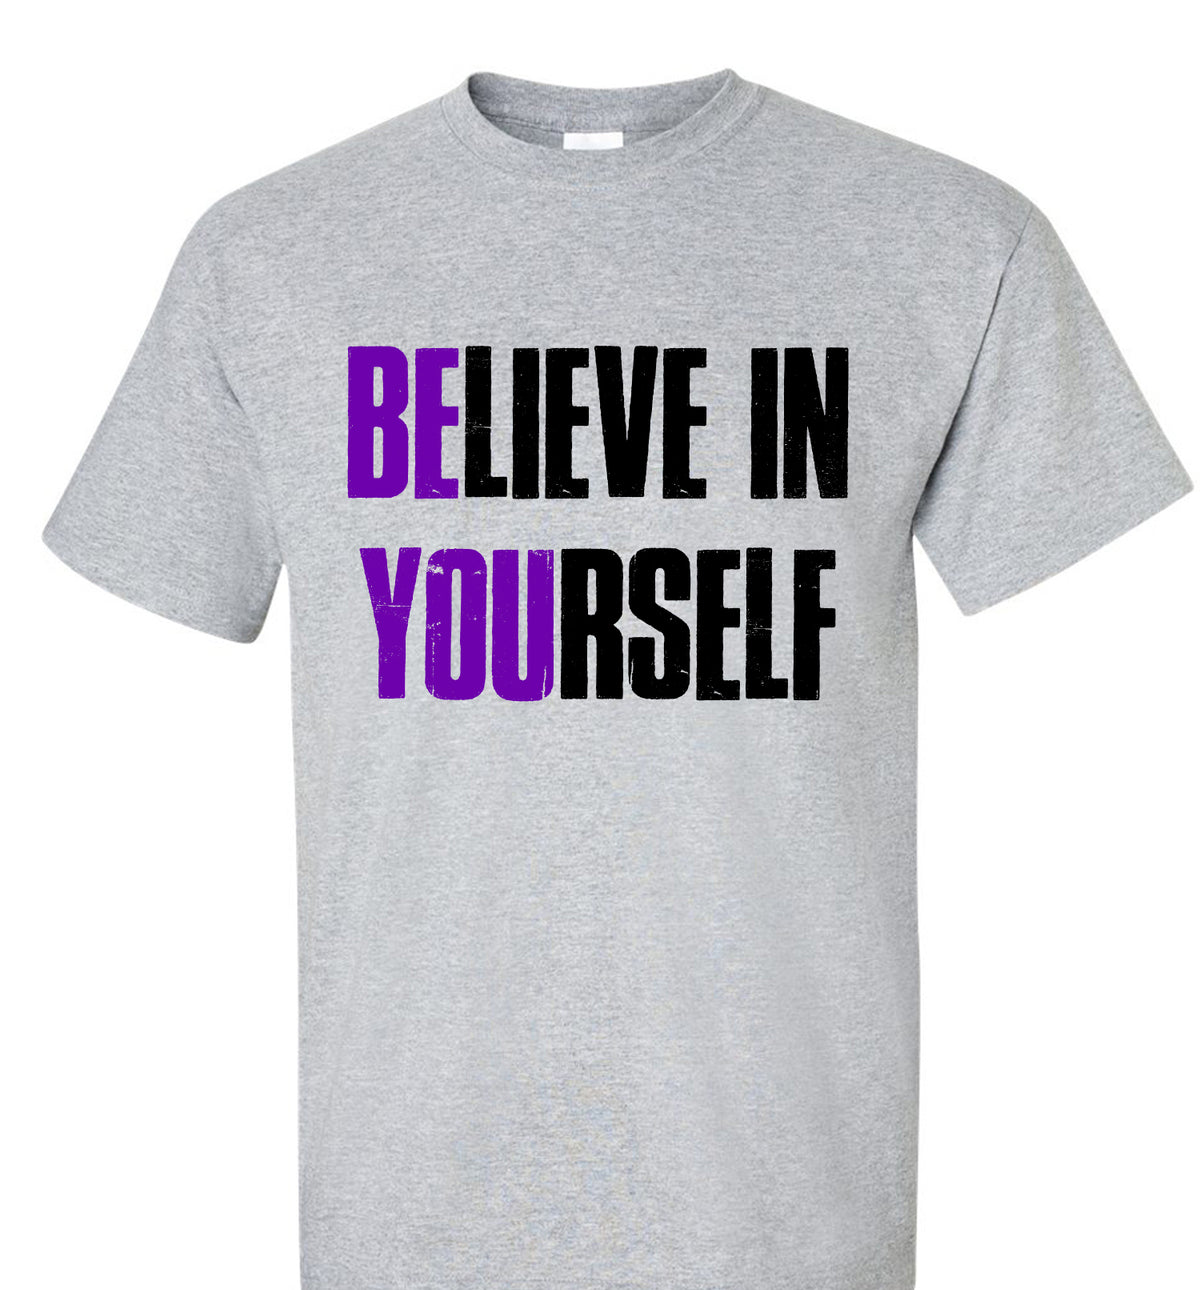 Believe in yourself T-shirt, Motivational Shirt